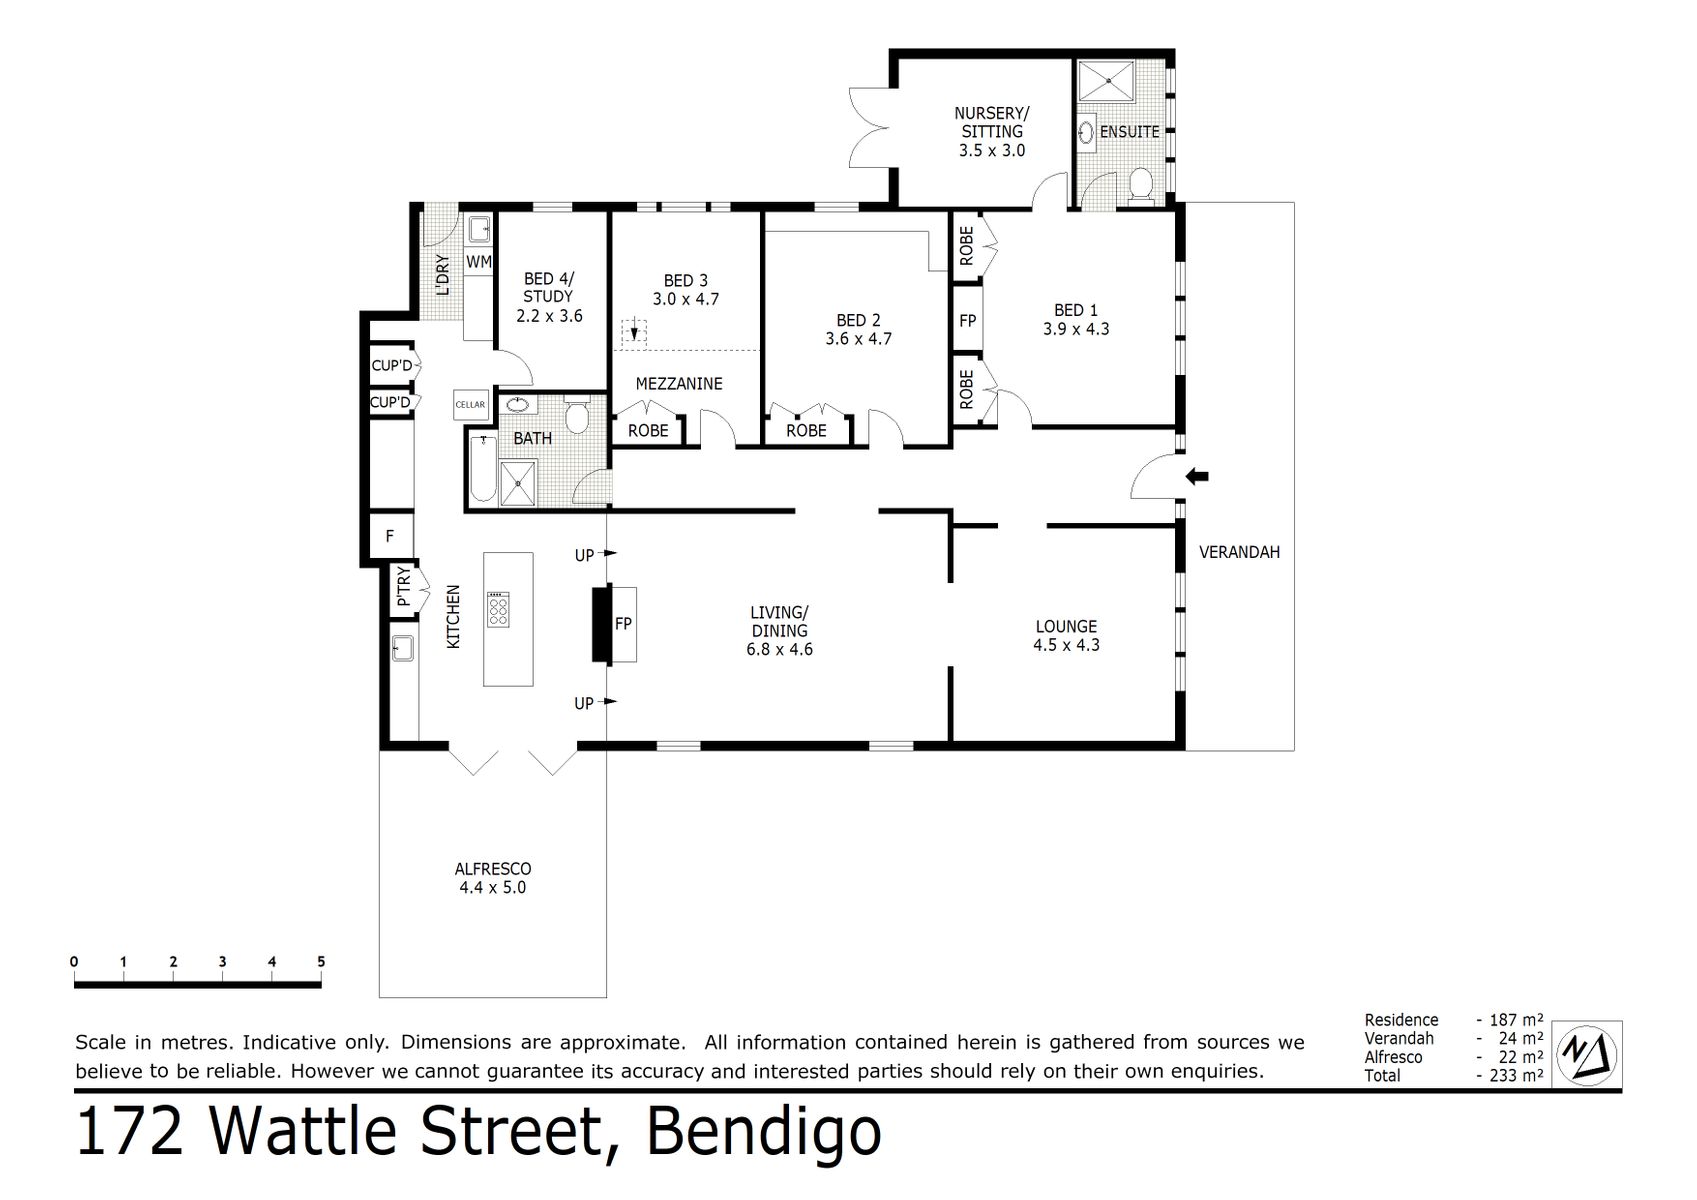 172 Wattle Street Bendigo (11 NOV 2020) 187sqm